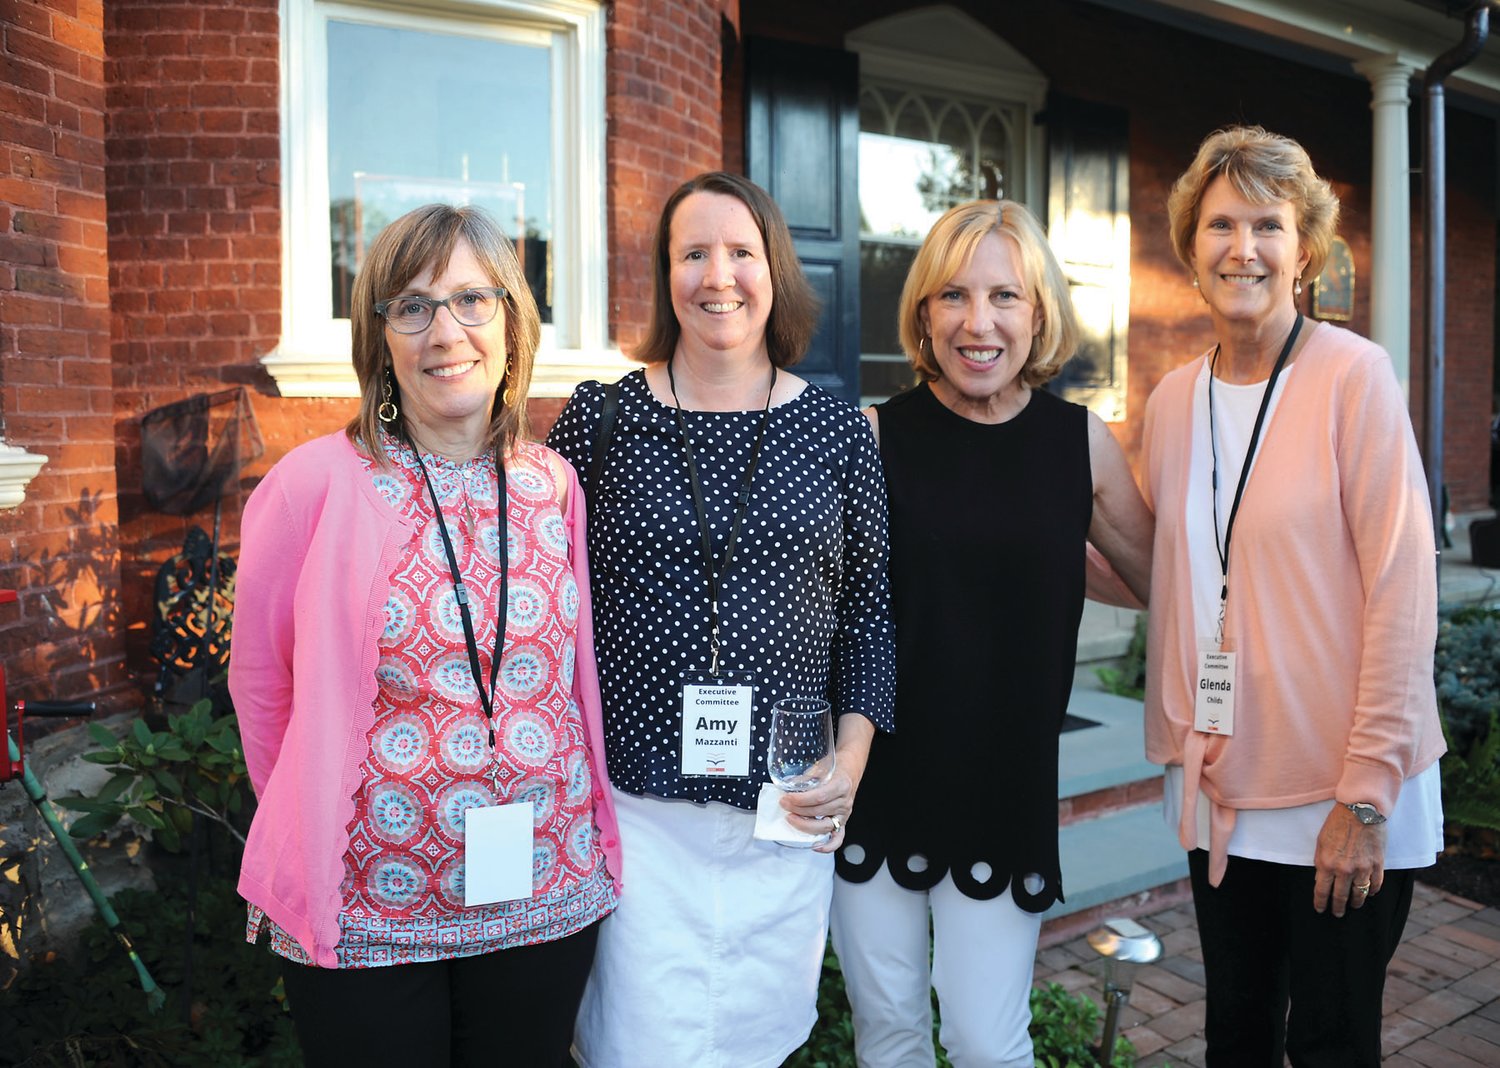 Regina Fried, Amy Mazzanti, author Christina Baker Kline and Glenda Childs.